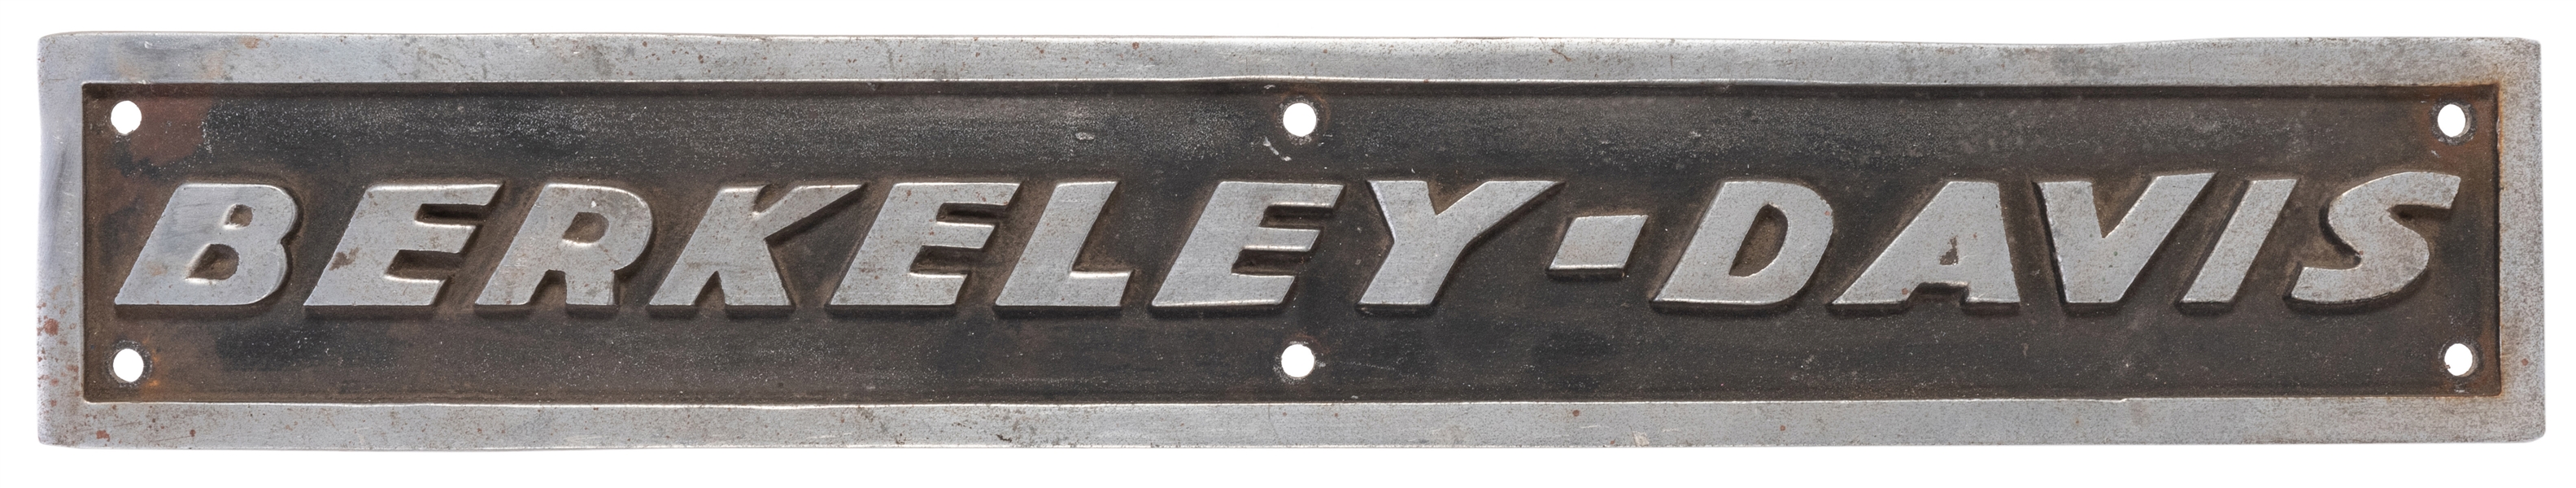  Berkeley-Davis Sign. 20th century. Pressed steel sign for th...